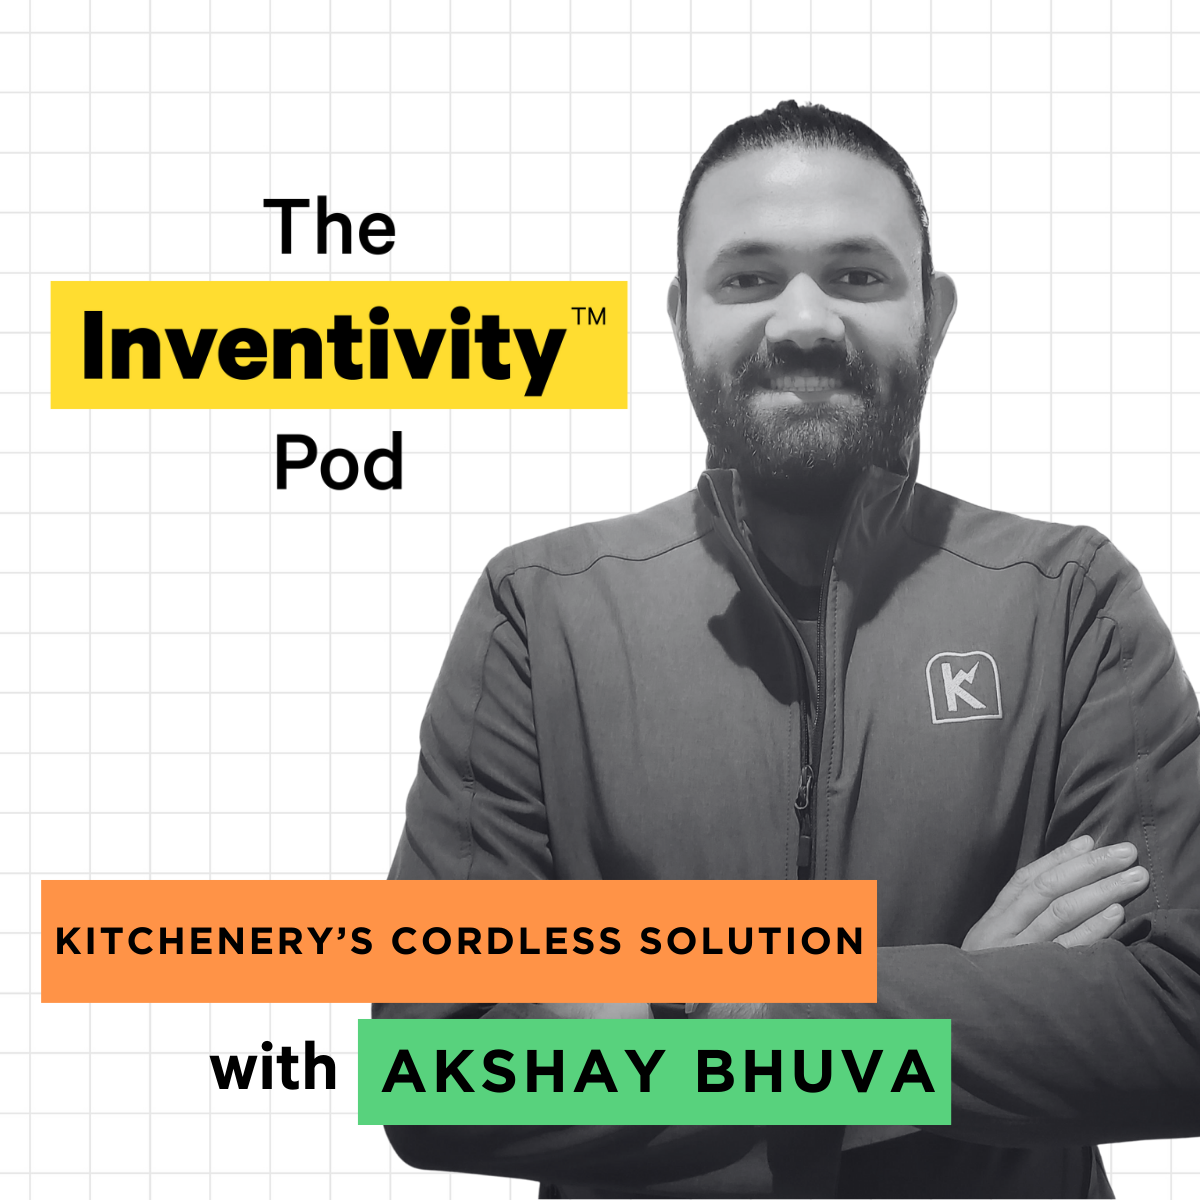 Kitchenery's Cordless Solution with Akshay Bhuva